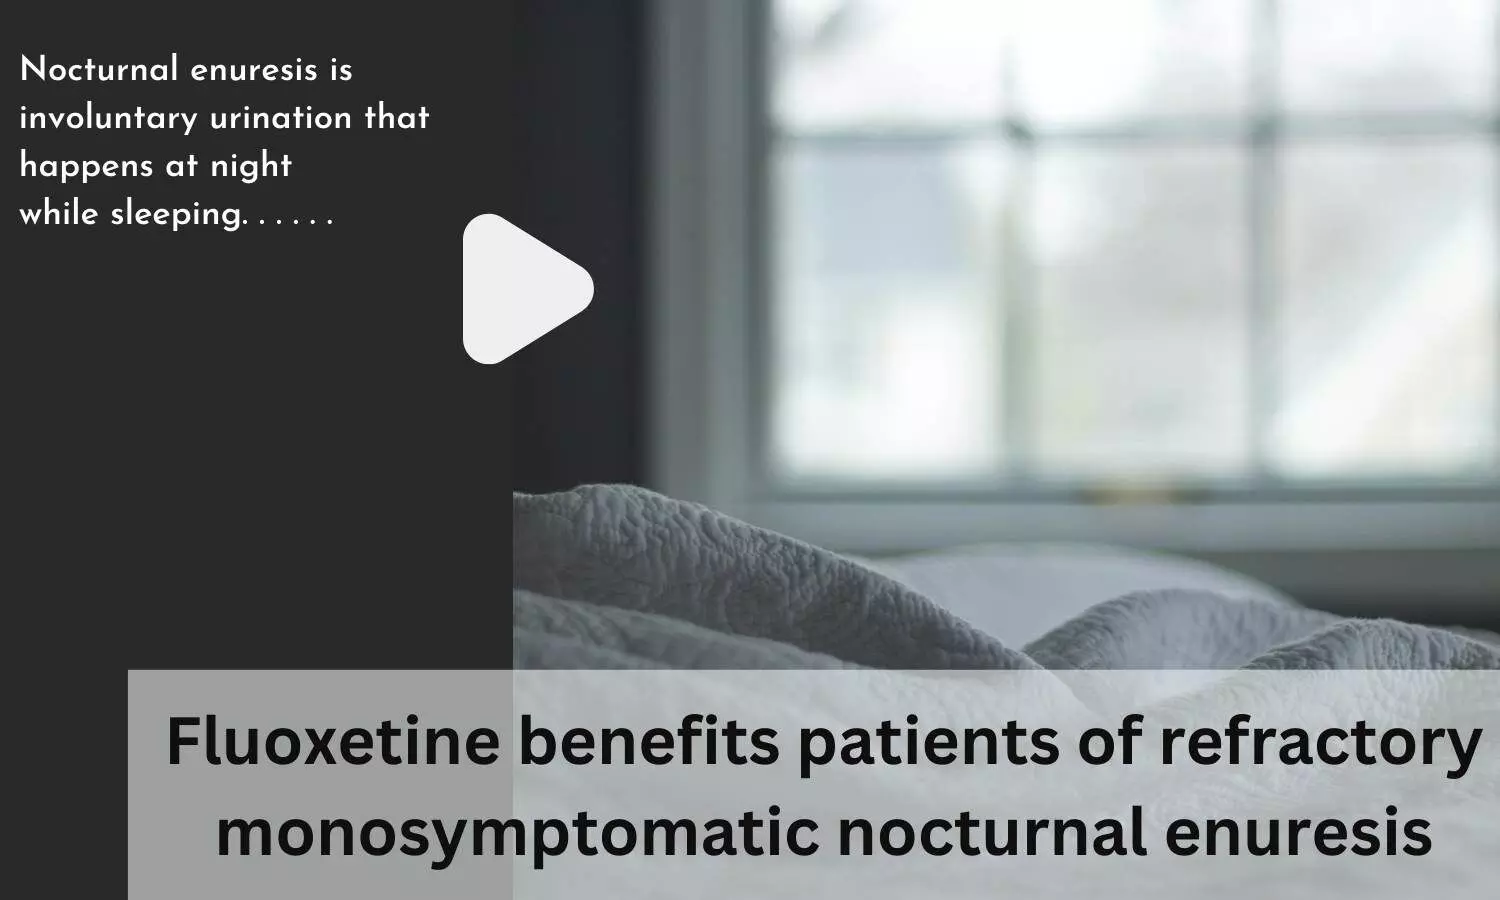 Fluoxetine benefits patients of refractory monosymptomatic nocturnal enuresis